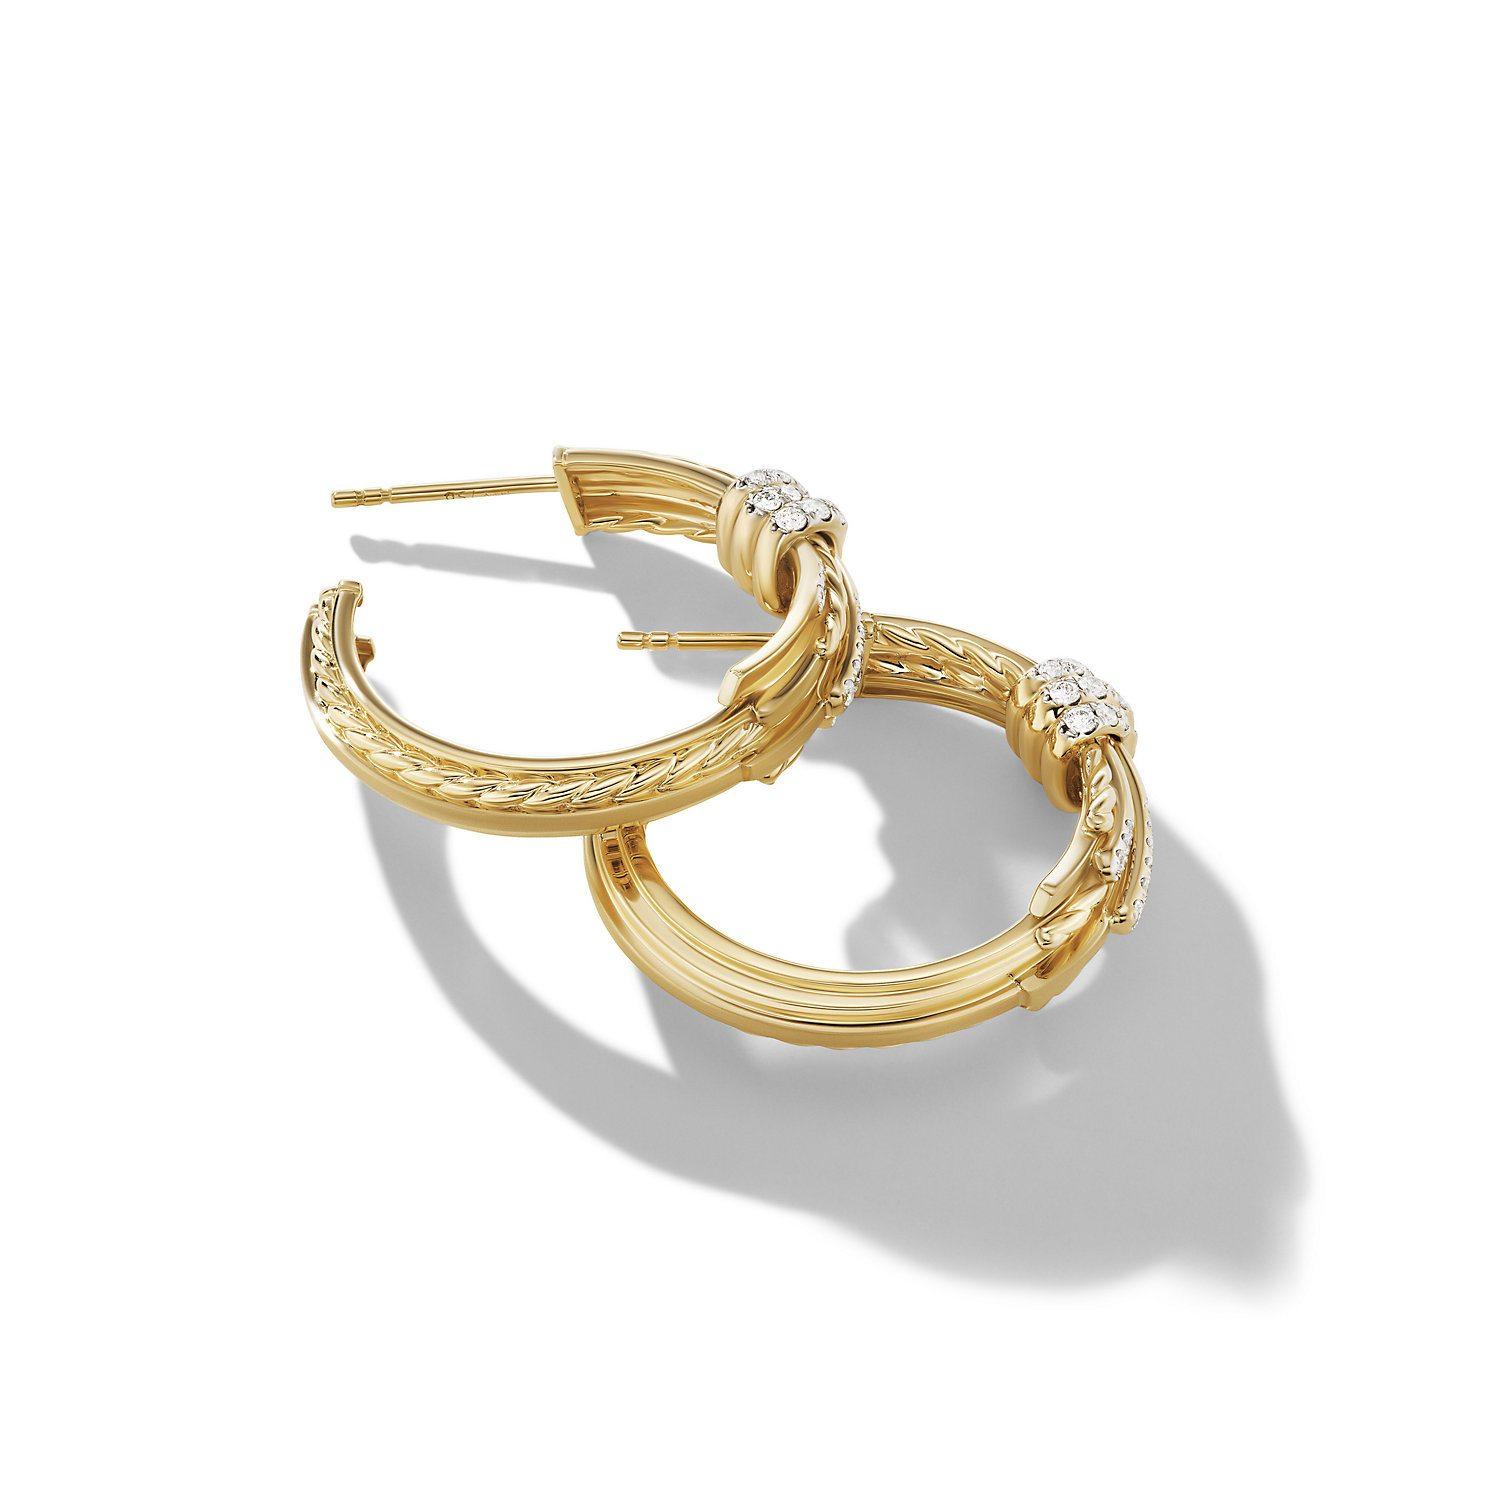 David Yurman Angelika 27mm Hoop Earrings in 18K Yellow Gold with Pave Diamonds 2